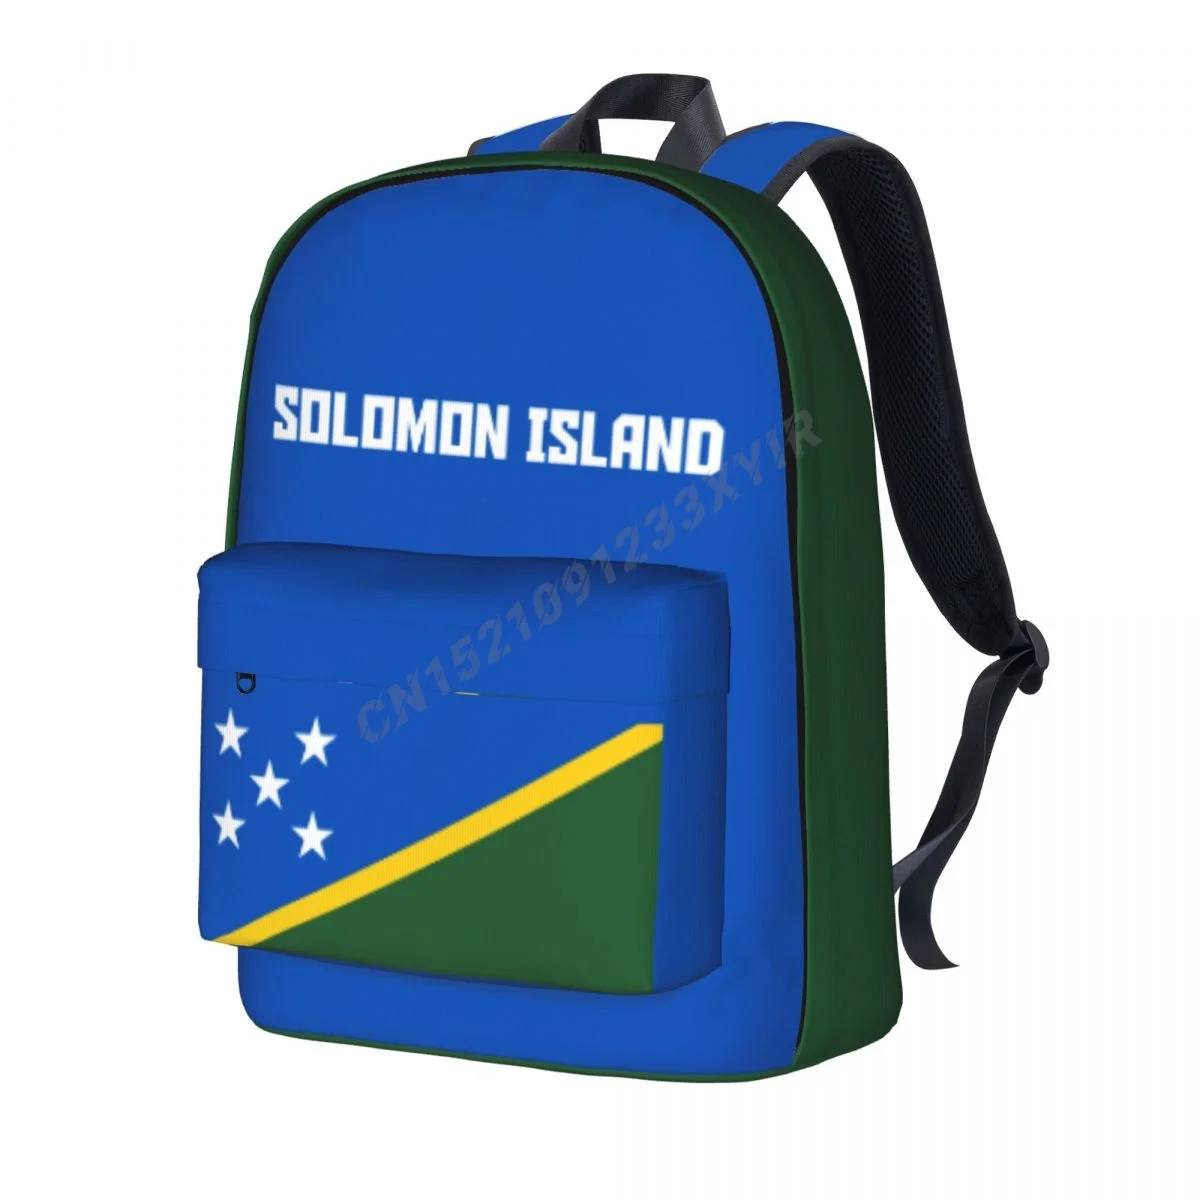 Mochila Unisex con bandera de las Islas Solomon Stitch, bolso escolar, maletín...